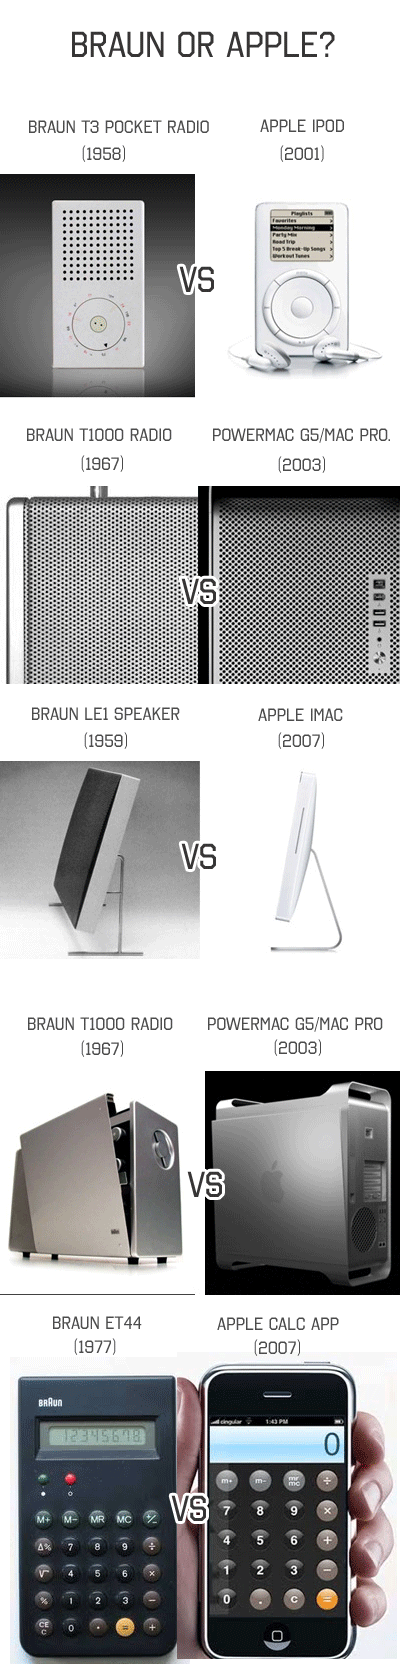 Braun or Apple? Infographic